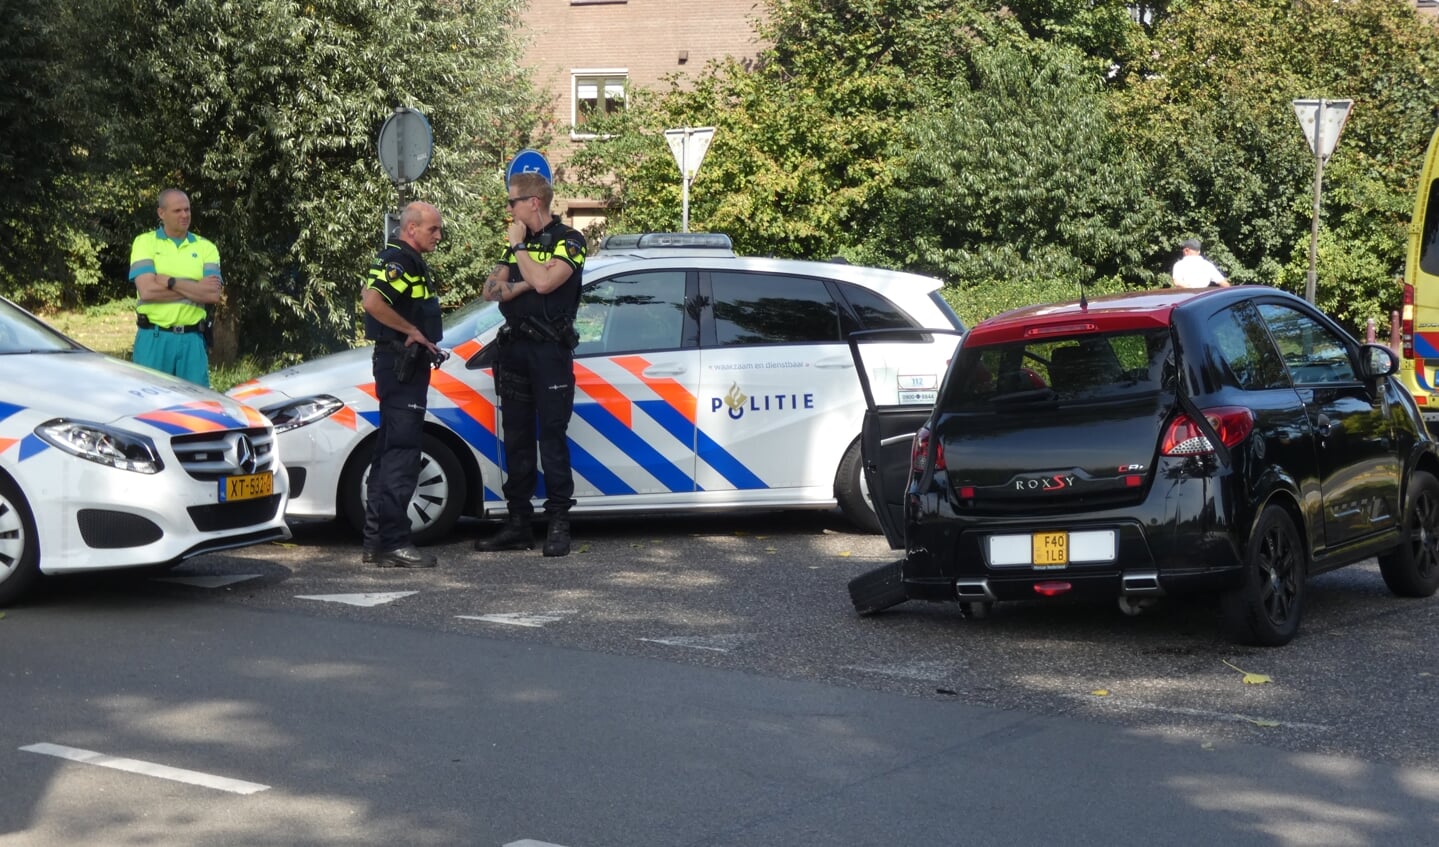 Botsing onopvallend politievoertuig en brommobiel op Osse kruising. (Foto: Thomas)